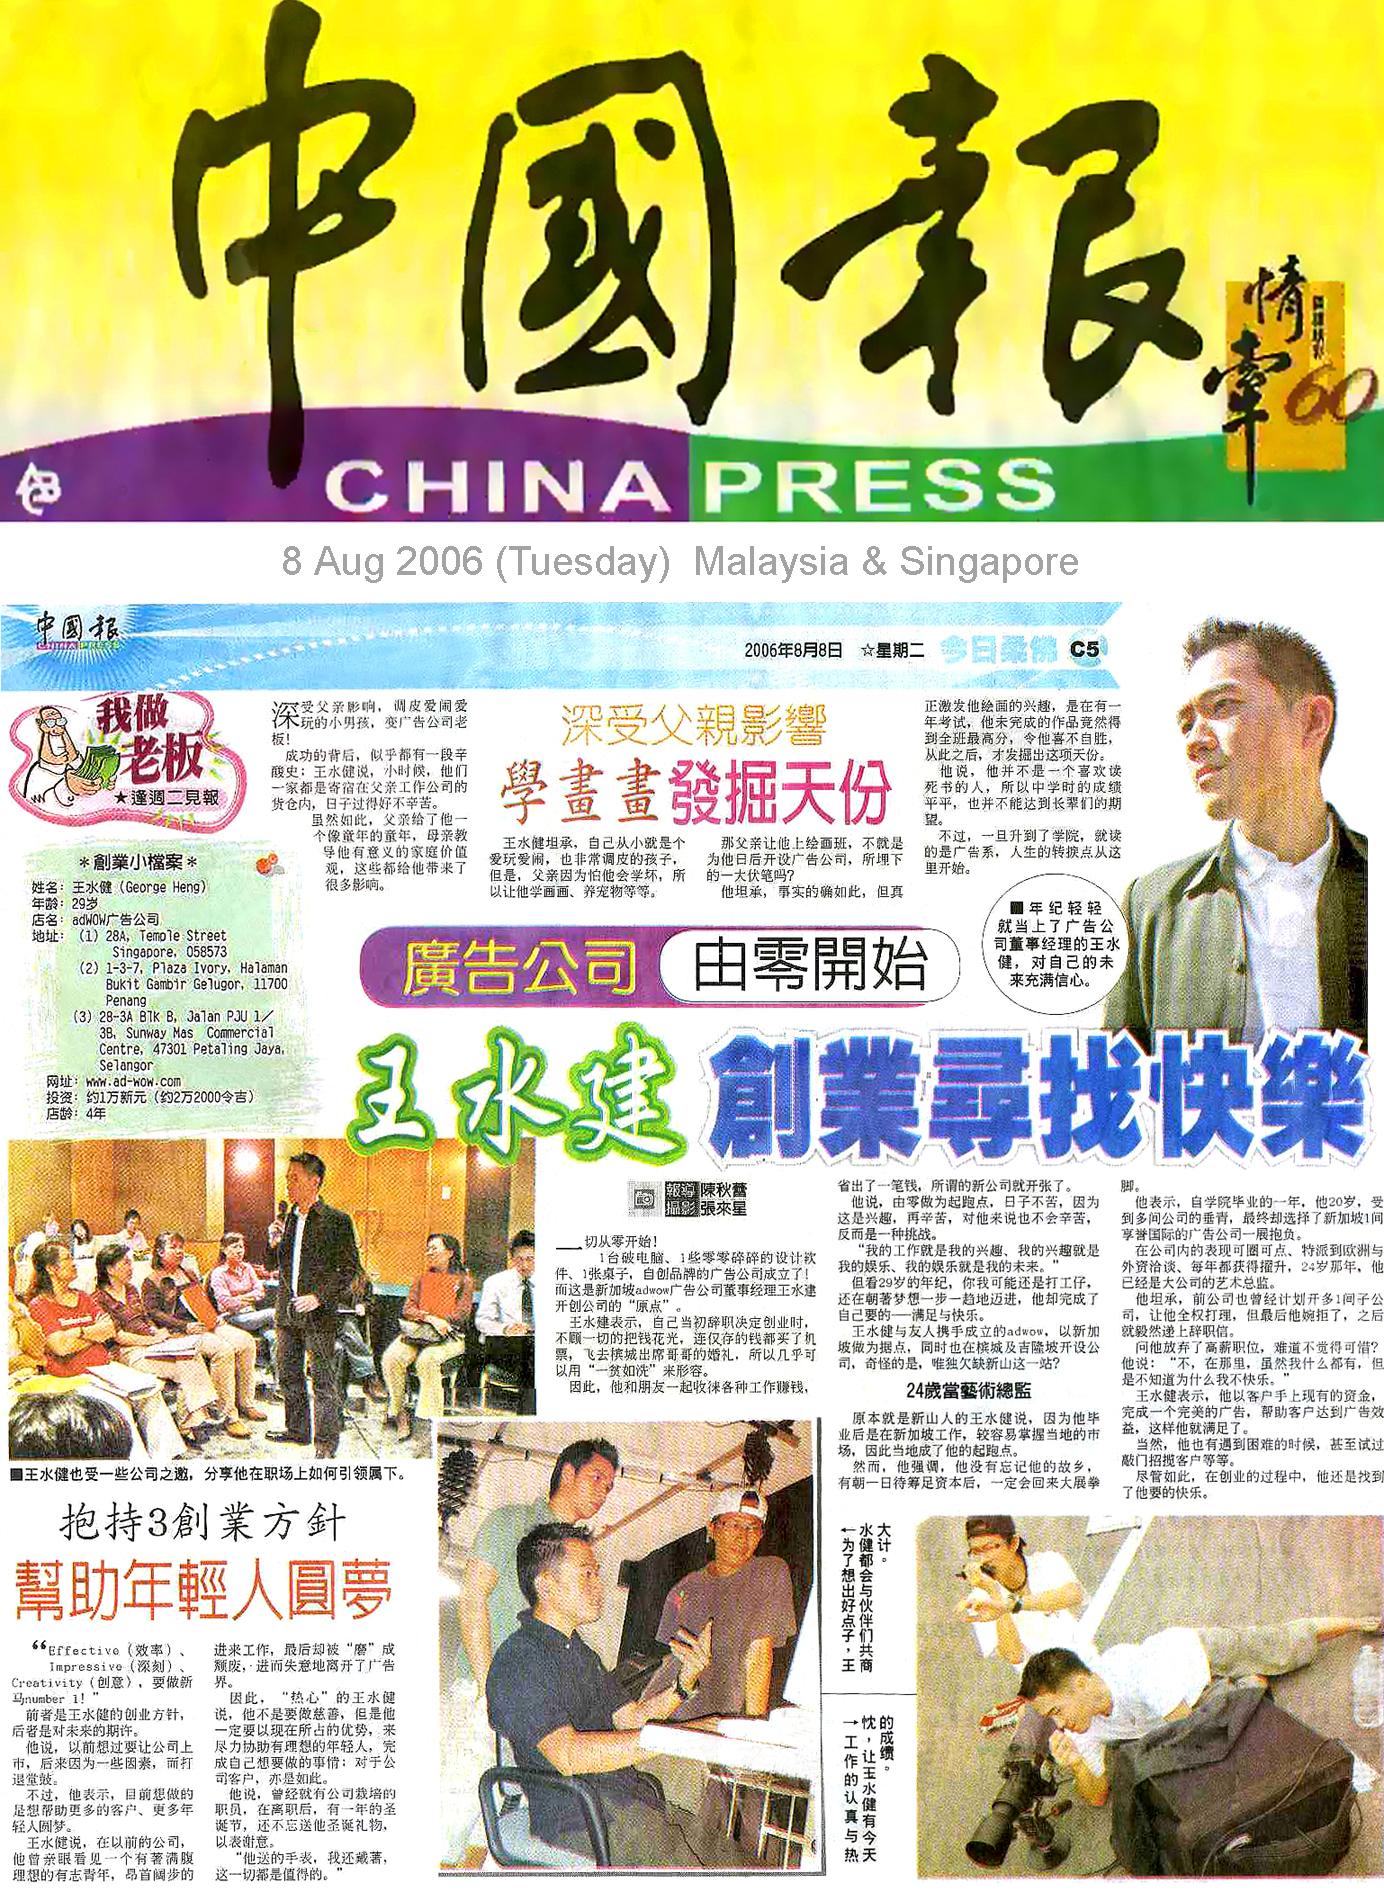 China Press Logo